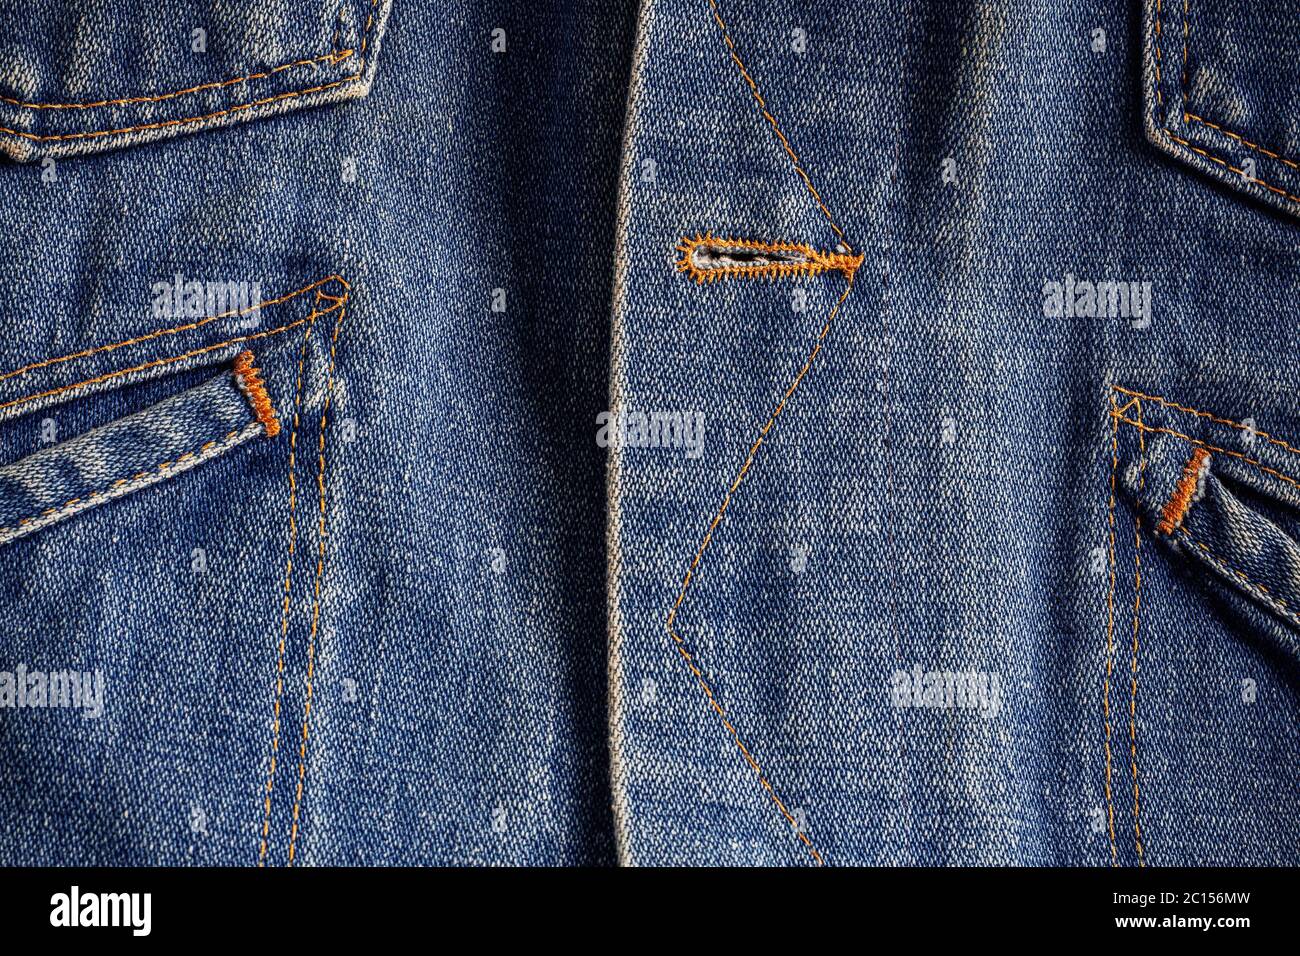 Textured of denim jacket Stock Photo - Alamy